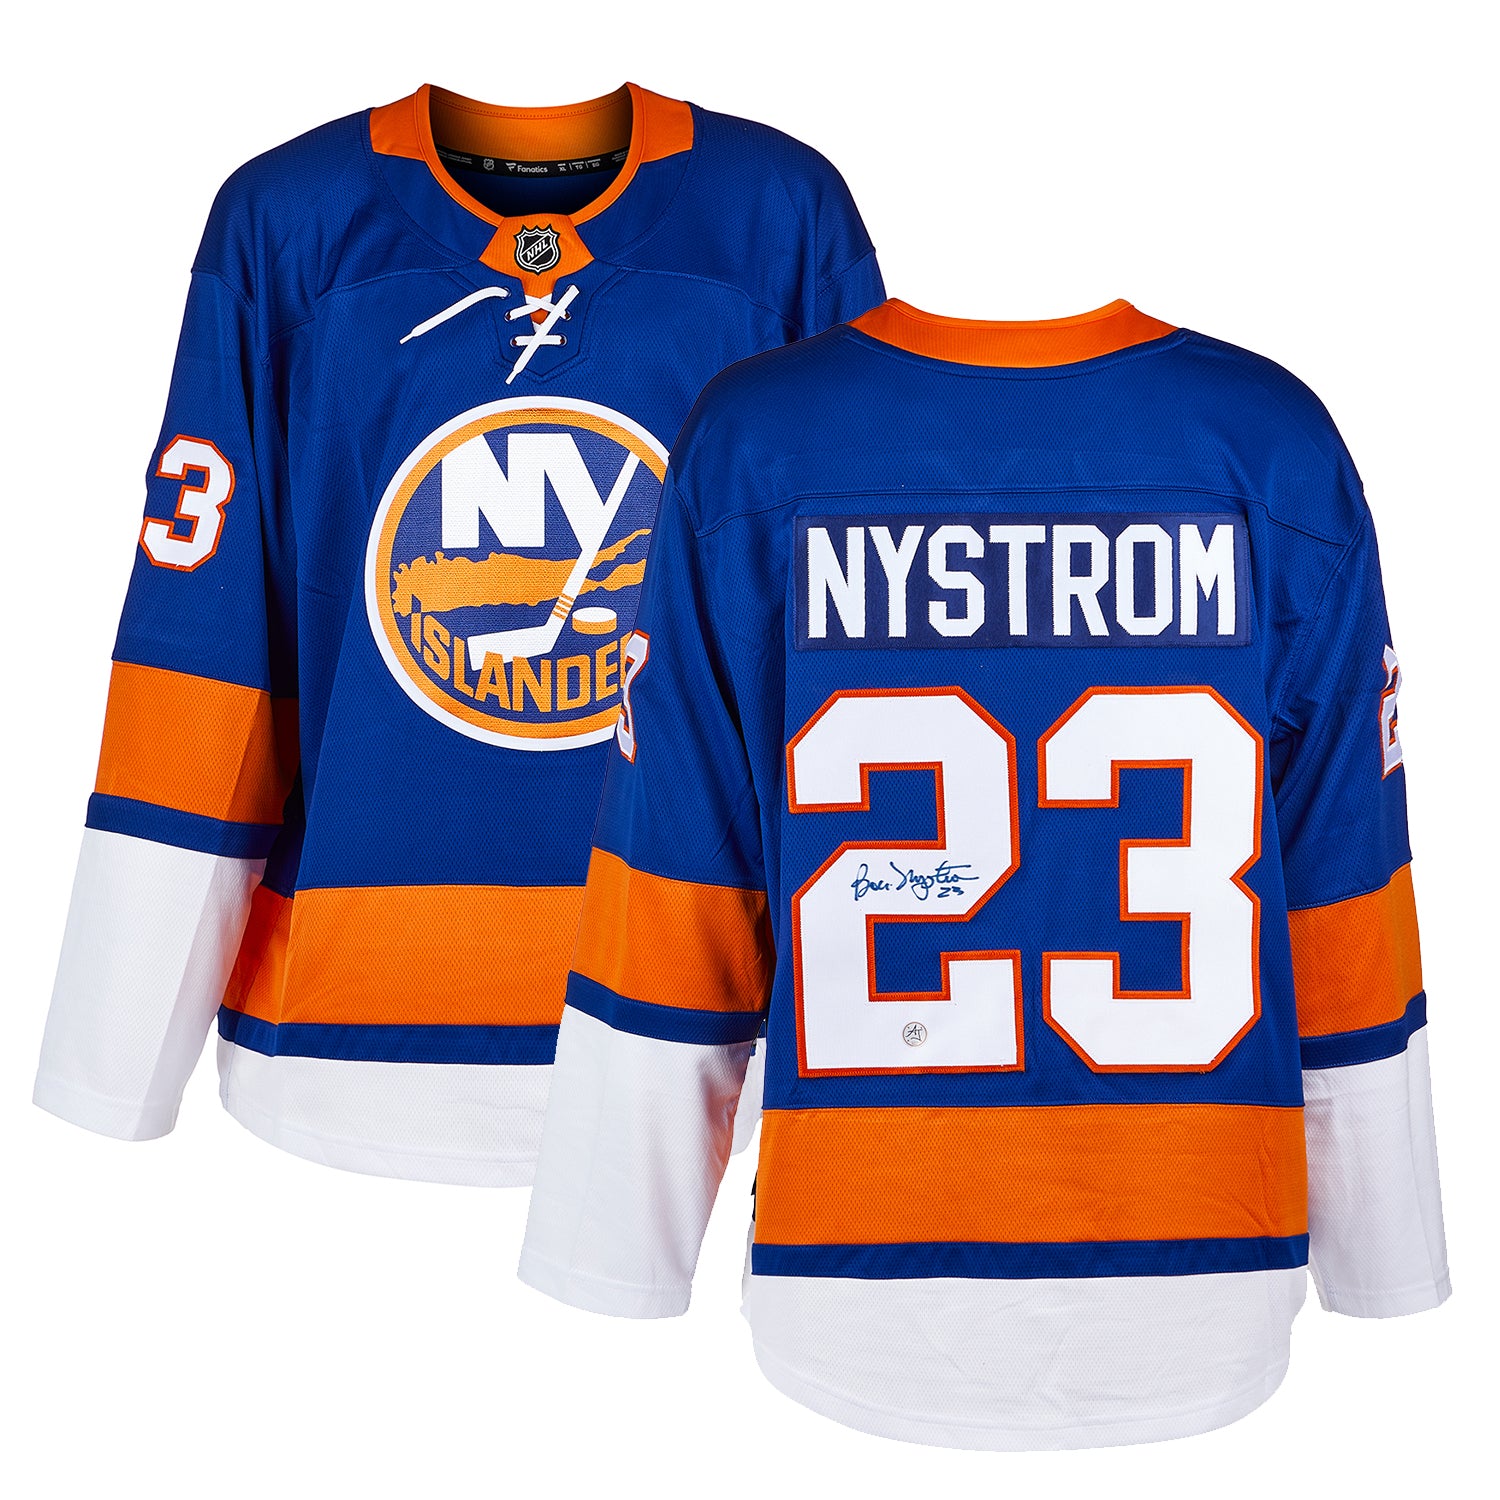 Bob Nystrom Autographed New York Islanders Fanatics Jersey